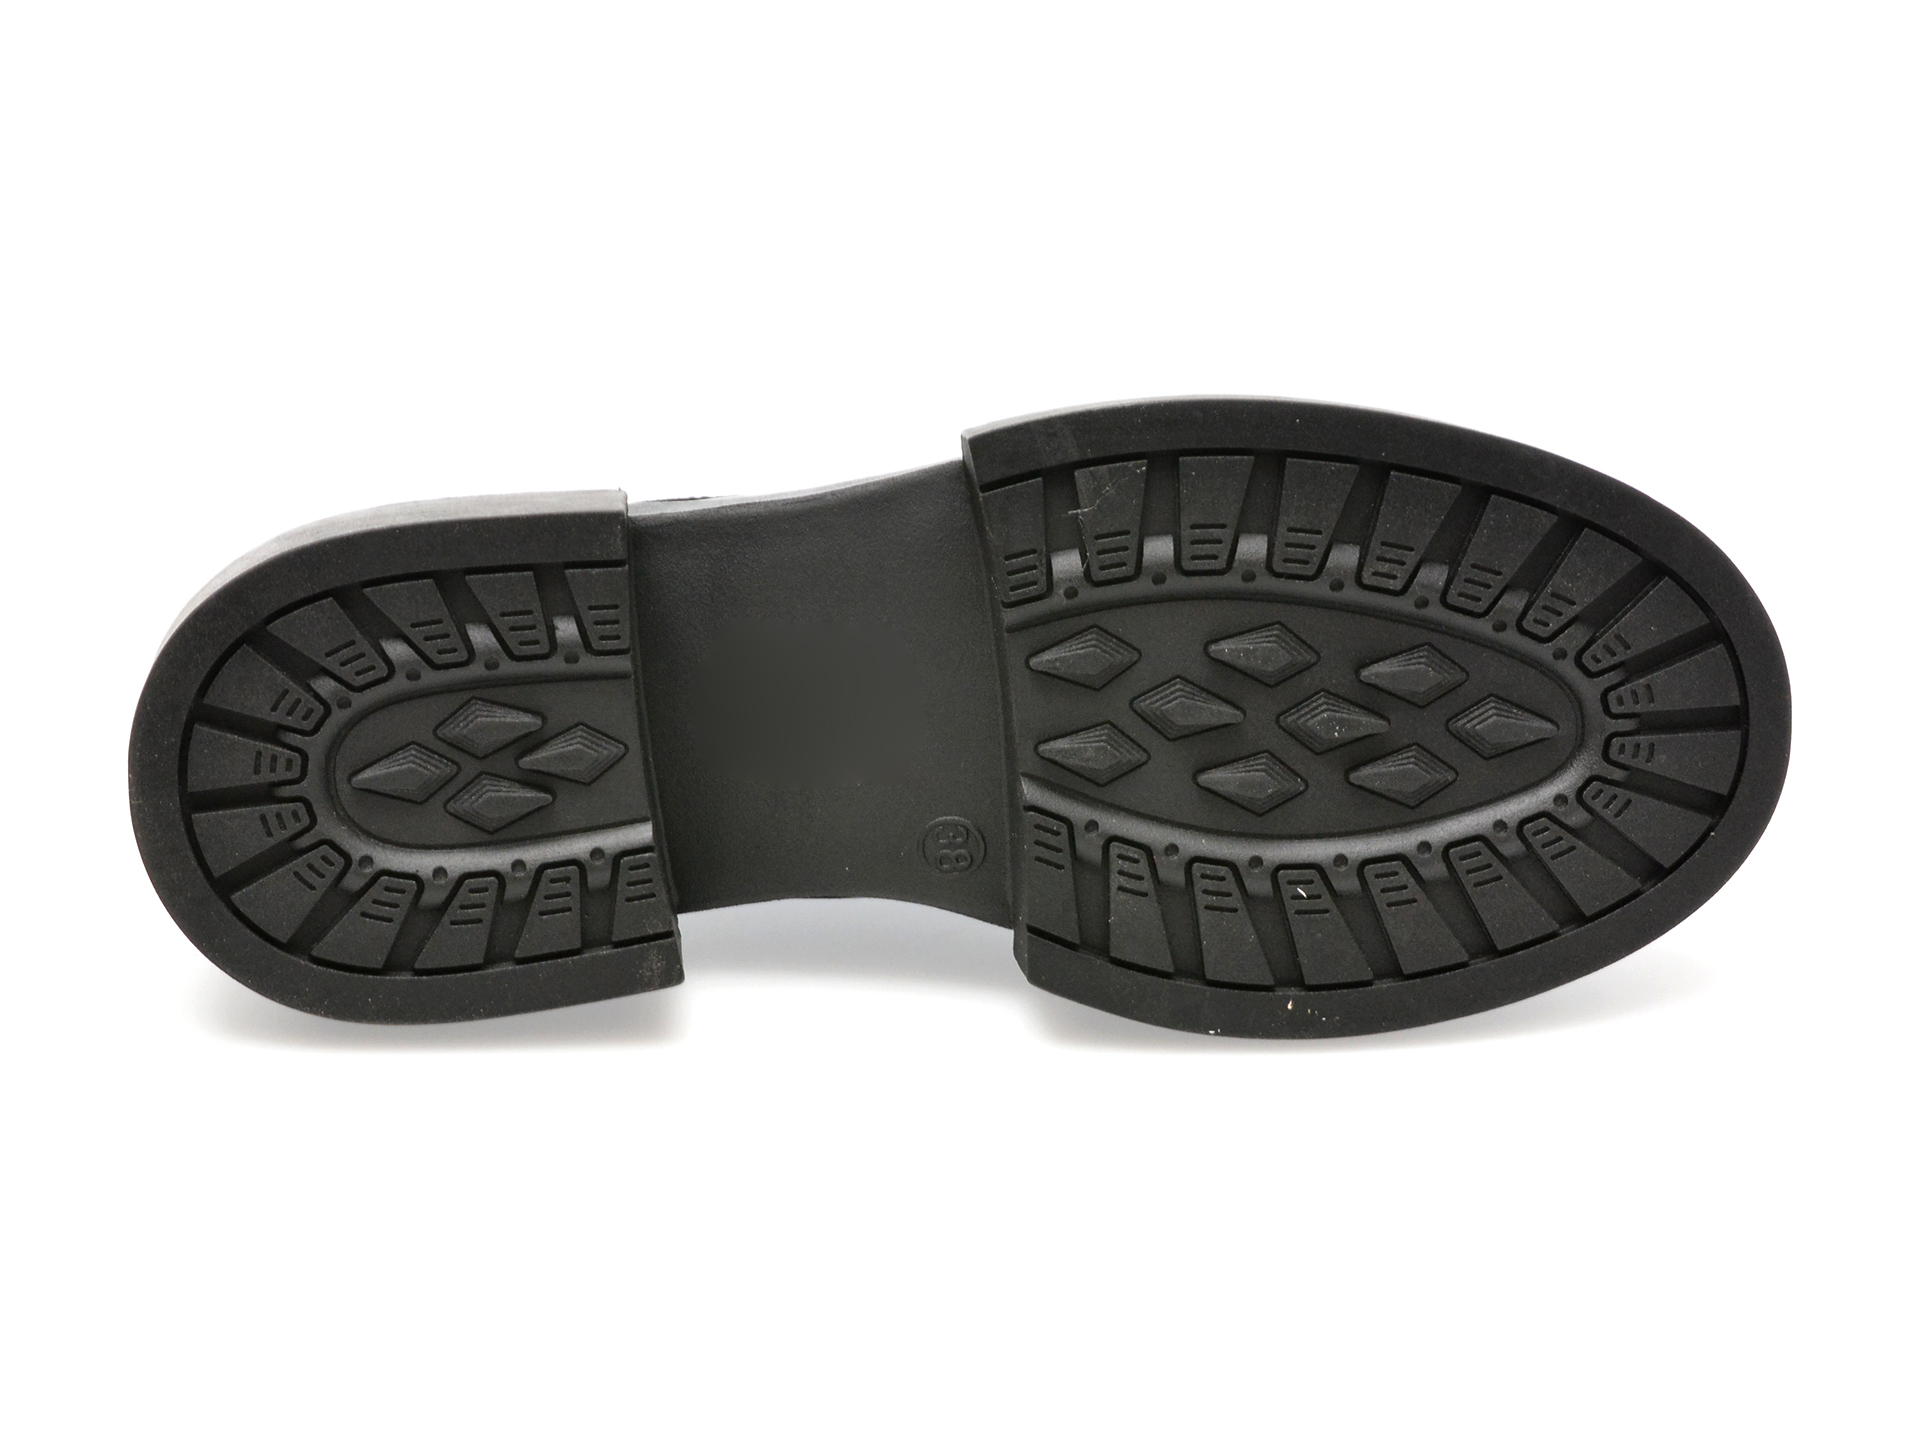 Pantofi LAURA BIAGIOTTI negri, 8230, din piele ecologica